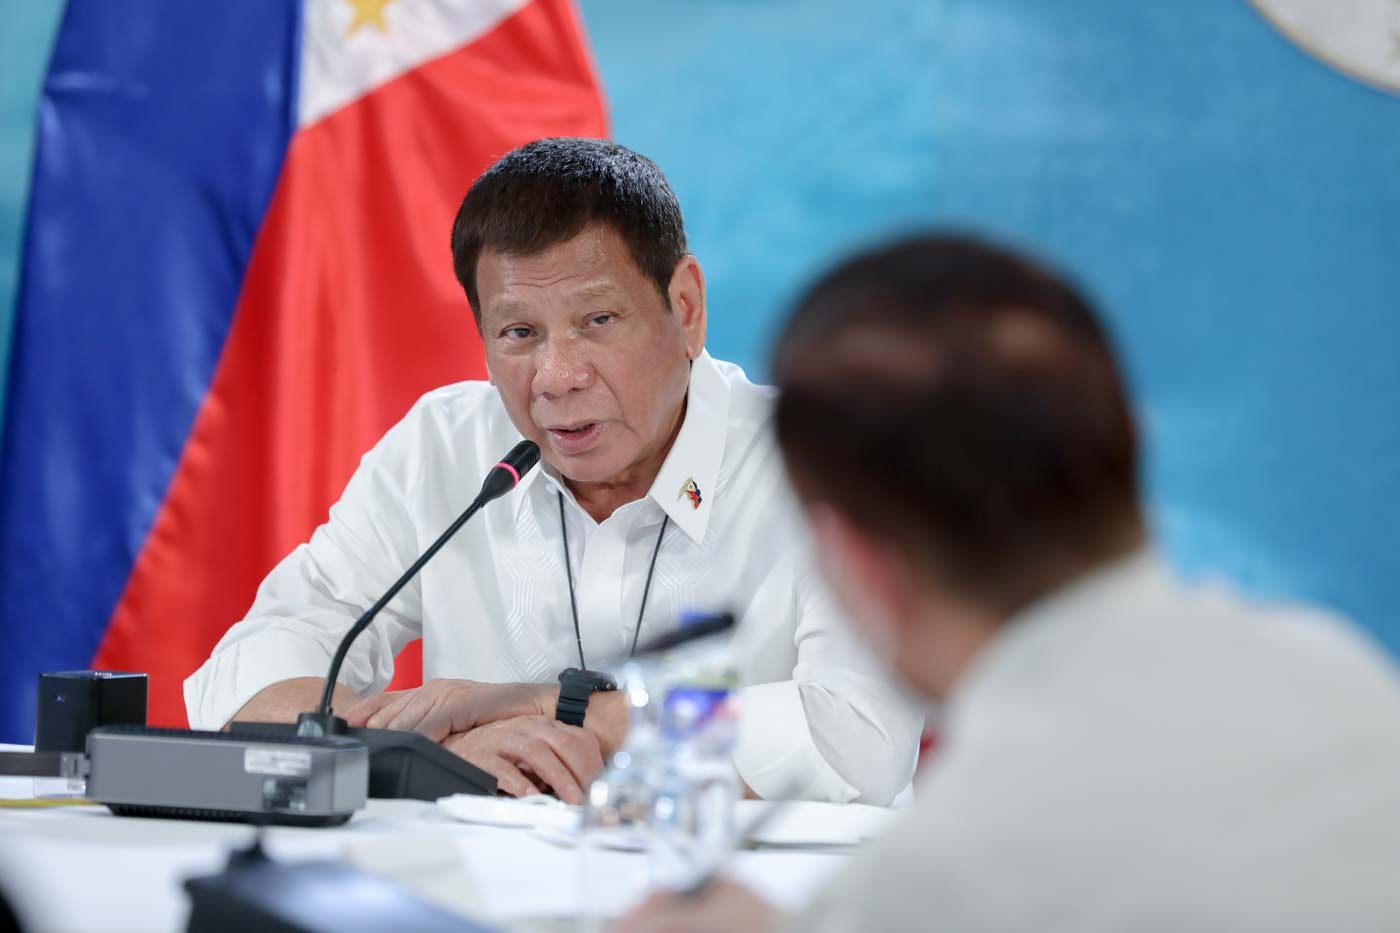 Roque defends Duterte’s ‘mukhang pera’ jab at Red Cross